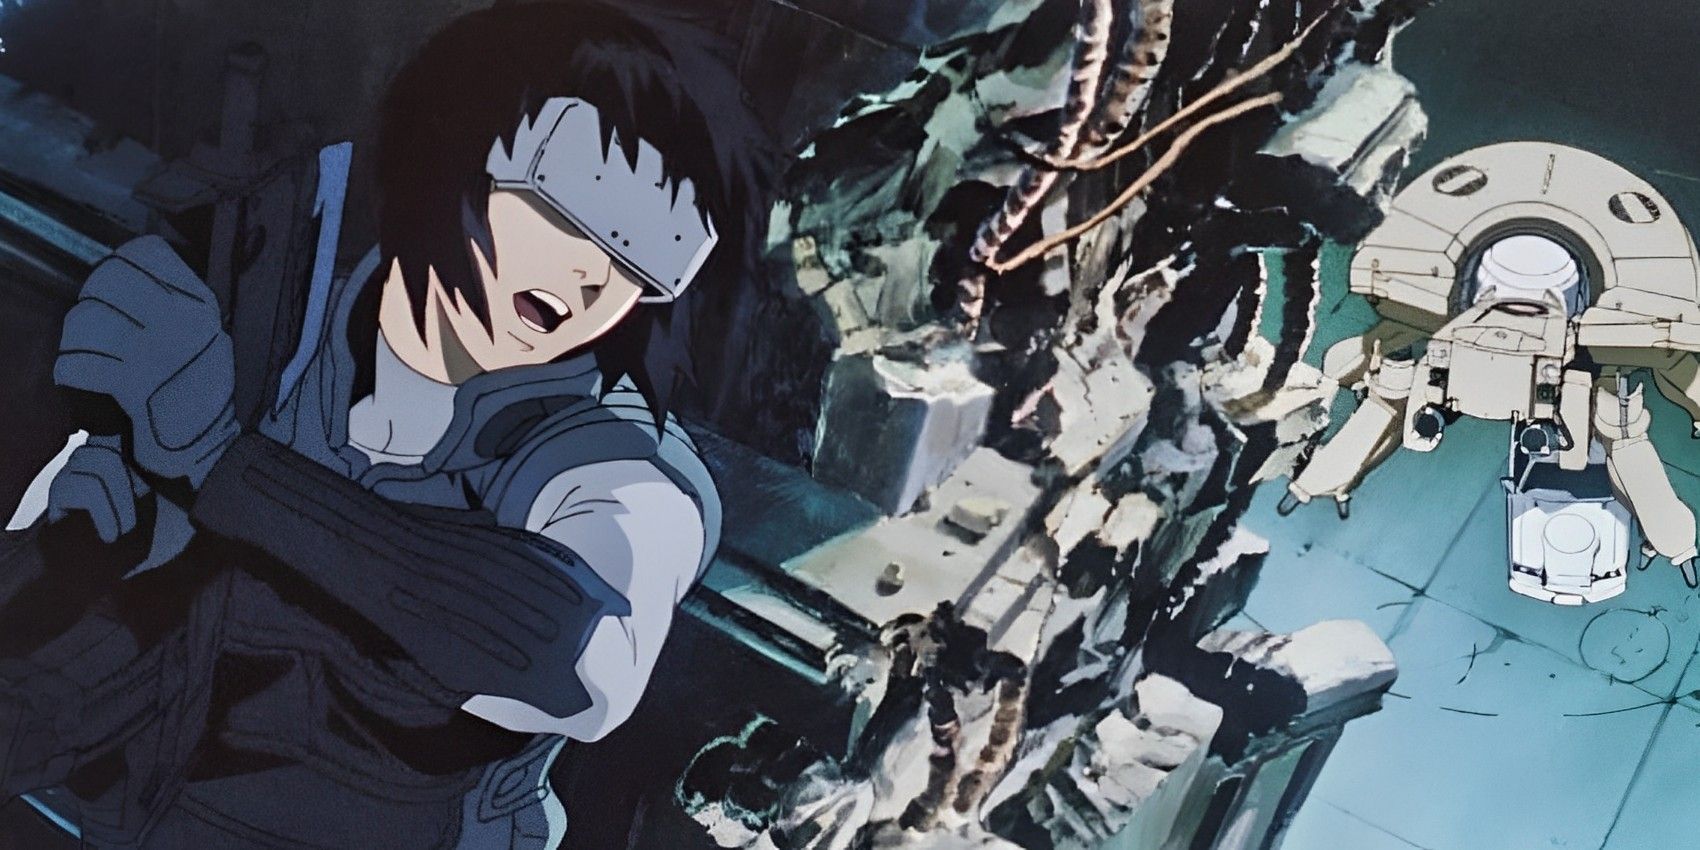 Major Motoko Kusanagi in the 1995 Ghost in the Shell movie